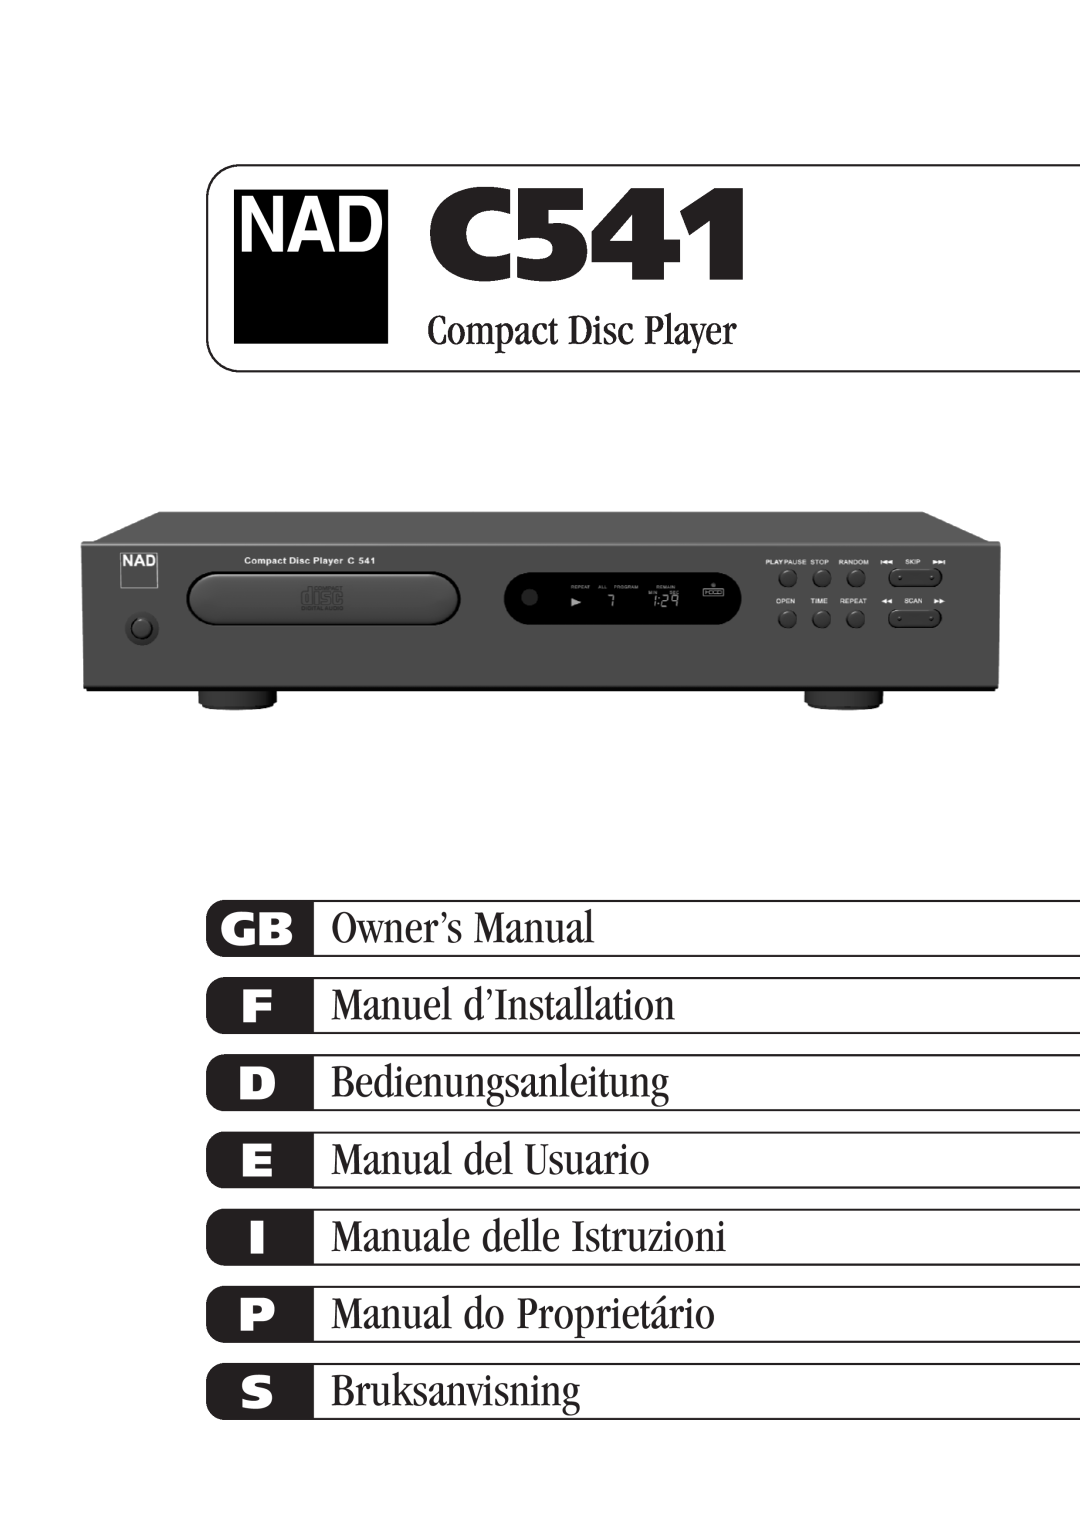 NAD C541 owner manual Gb F D E I P S, Bedienungsanleitung Manual del Usuario, Bruksanvisning, Compact Disc Player 